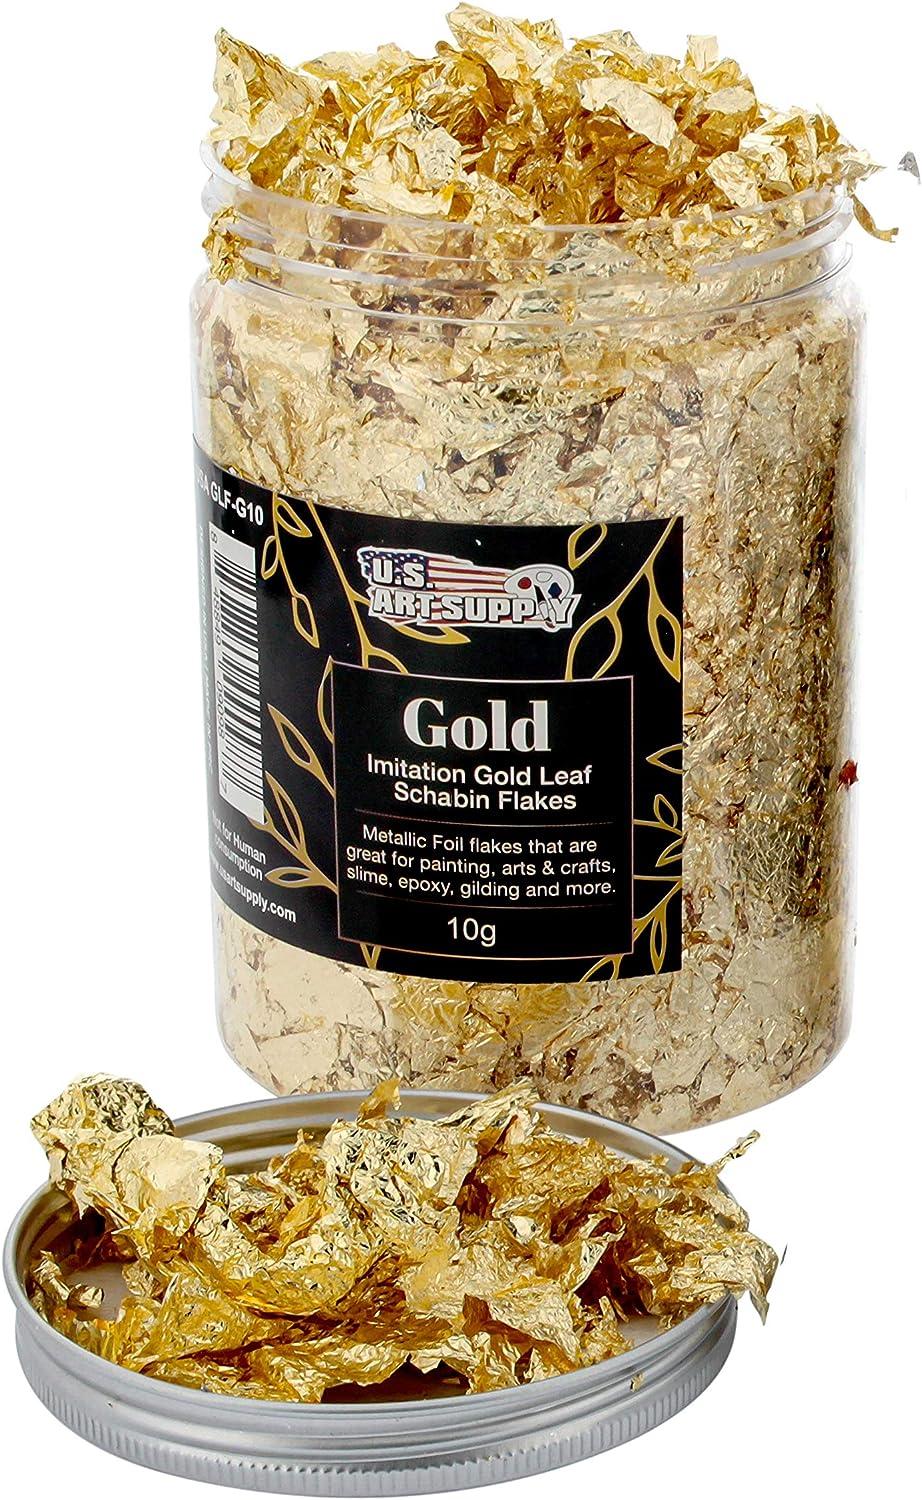 Gold Foil Flakes for Resin,Imitation Gold Foil Flakes Metallic